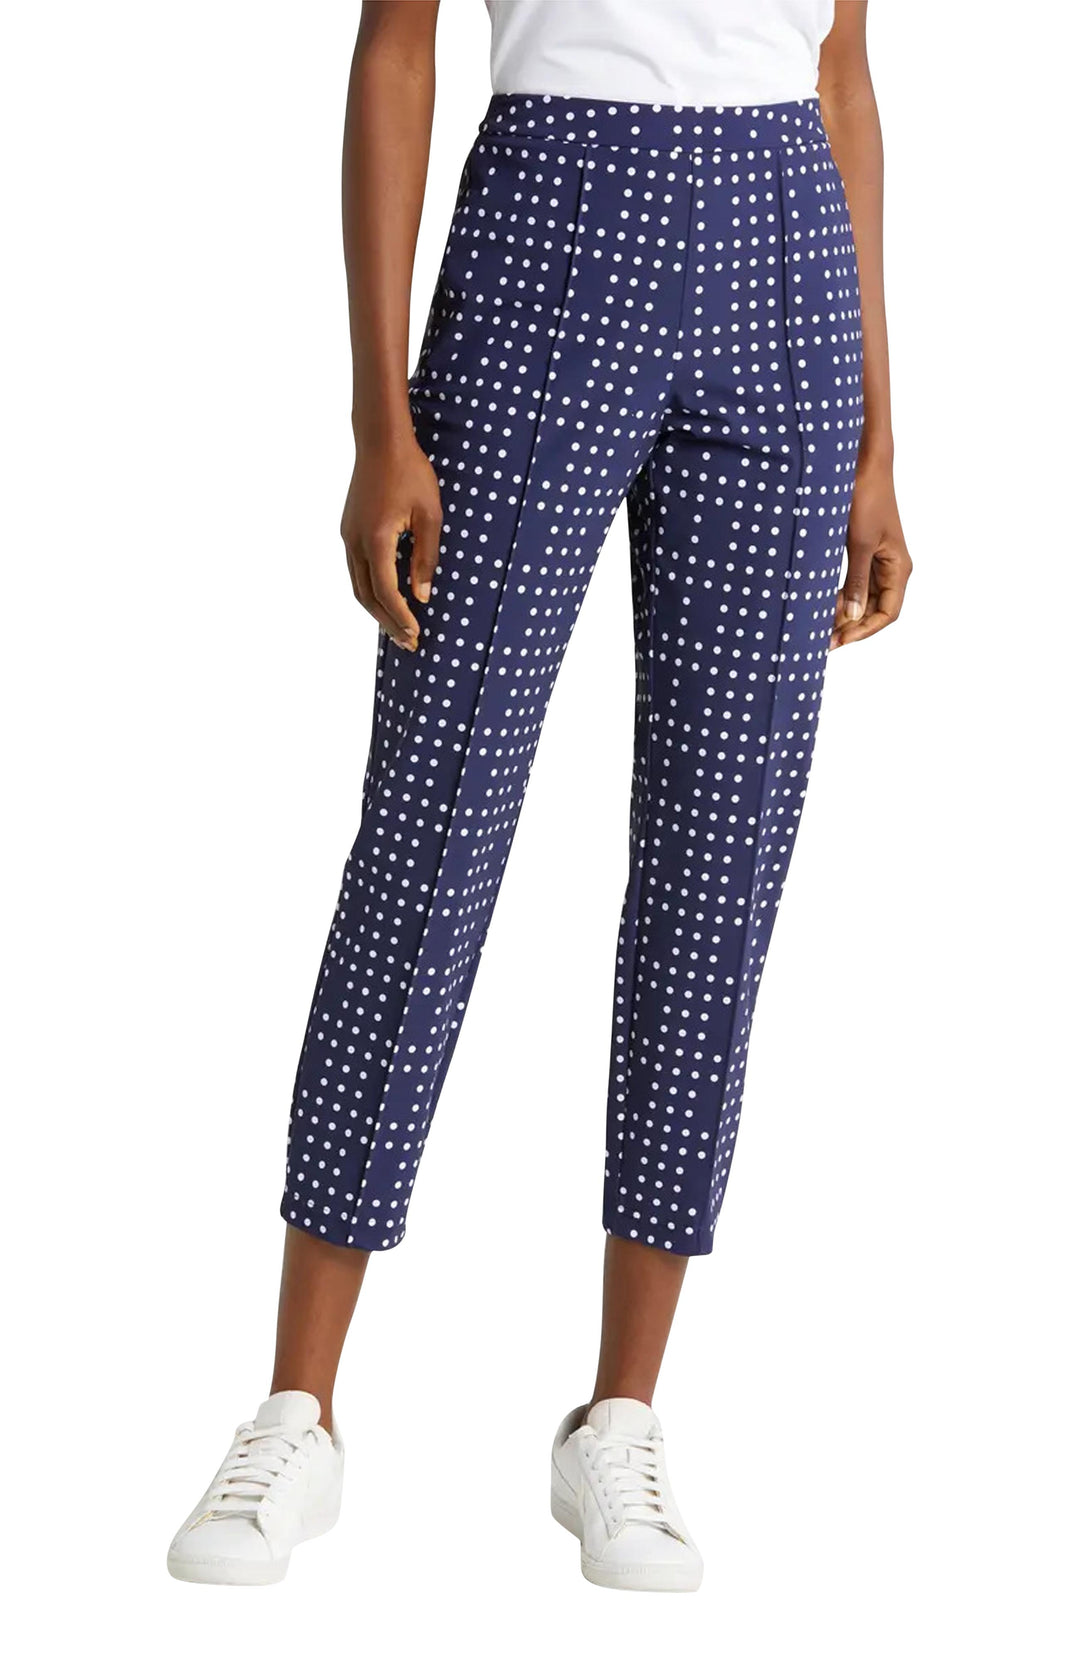 Woman wearing navy polka dot crop golf pants